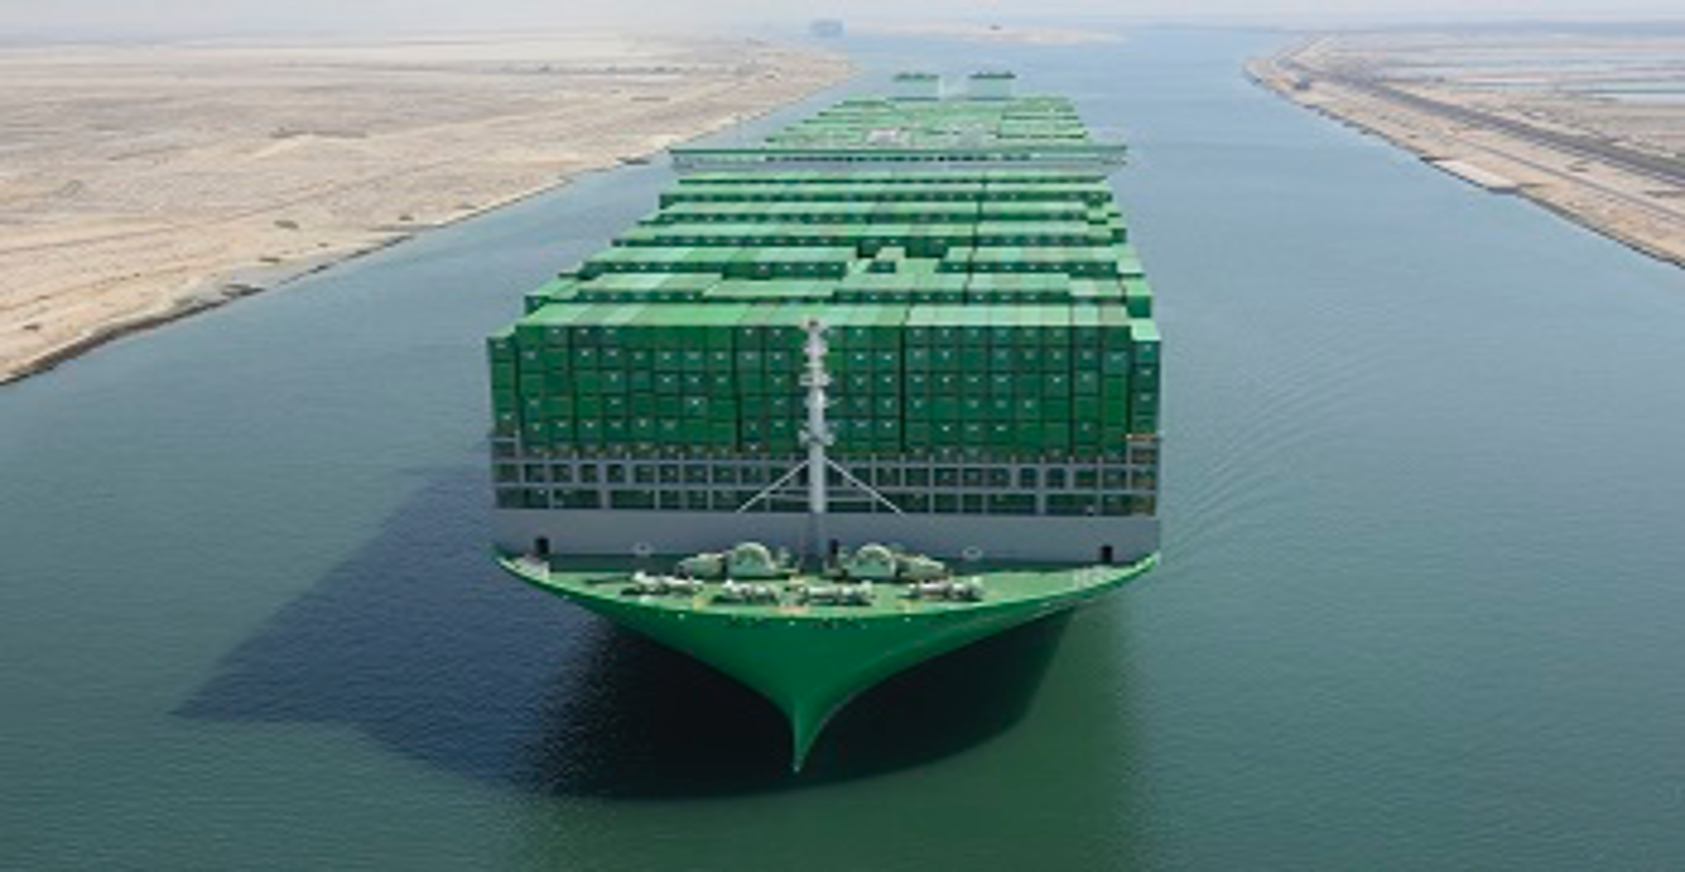 Nave in transito nel Canale di Suez (fonte: Suez Canal Authority)